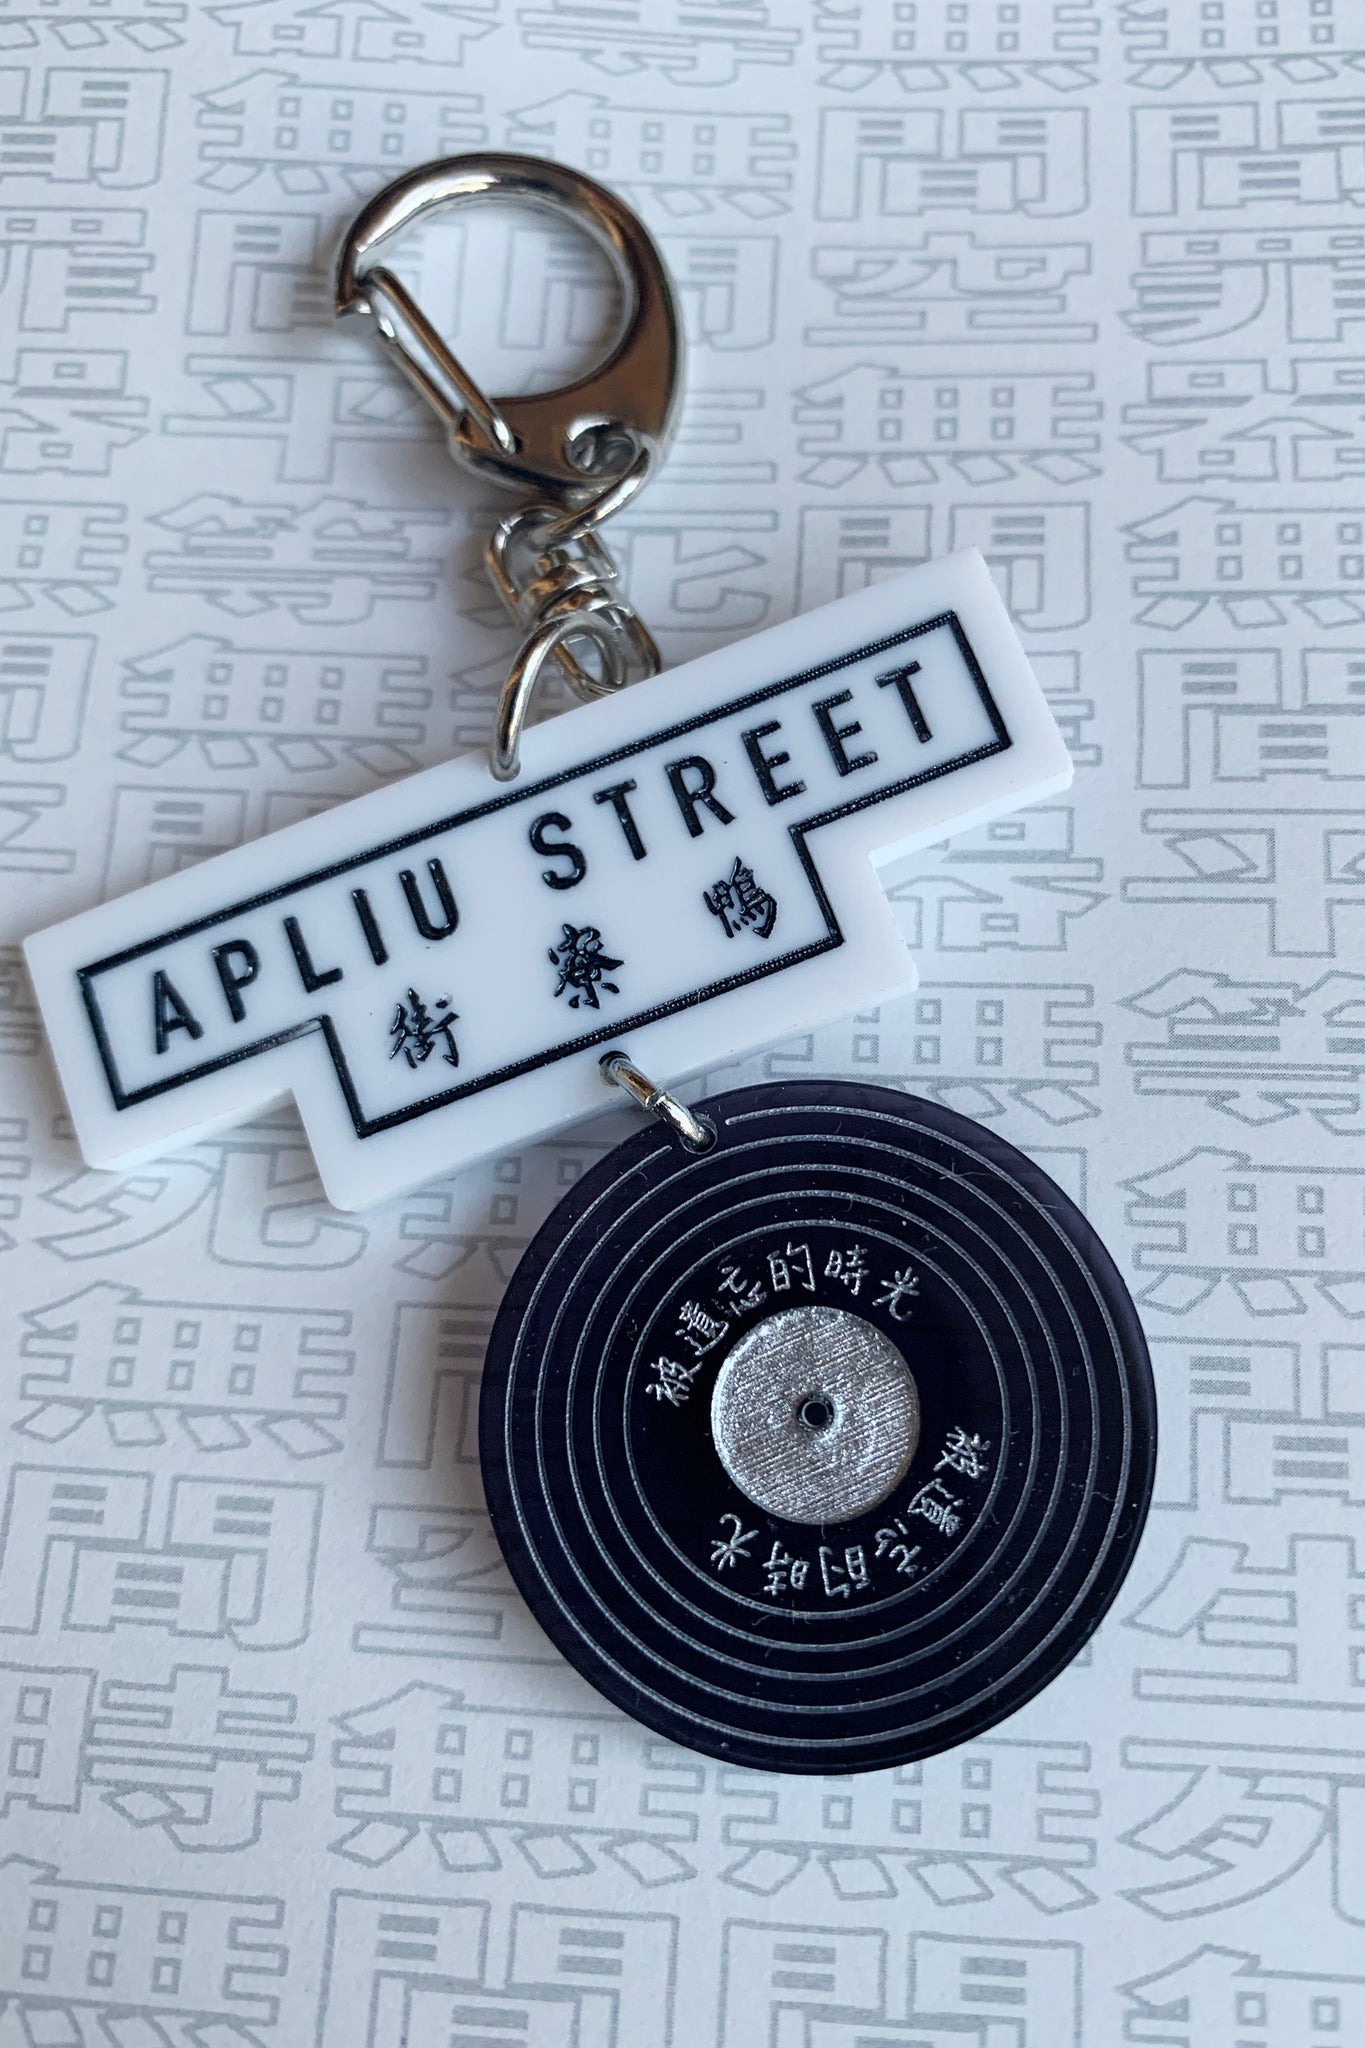 Apliu Street & Vinyl Music Key Holder